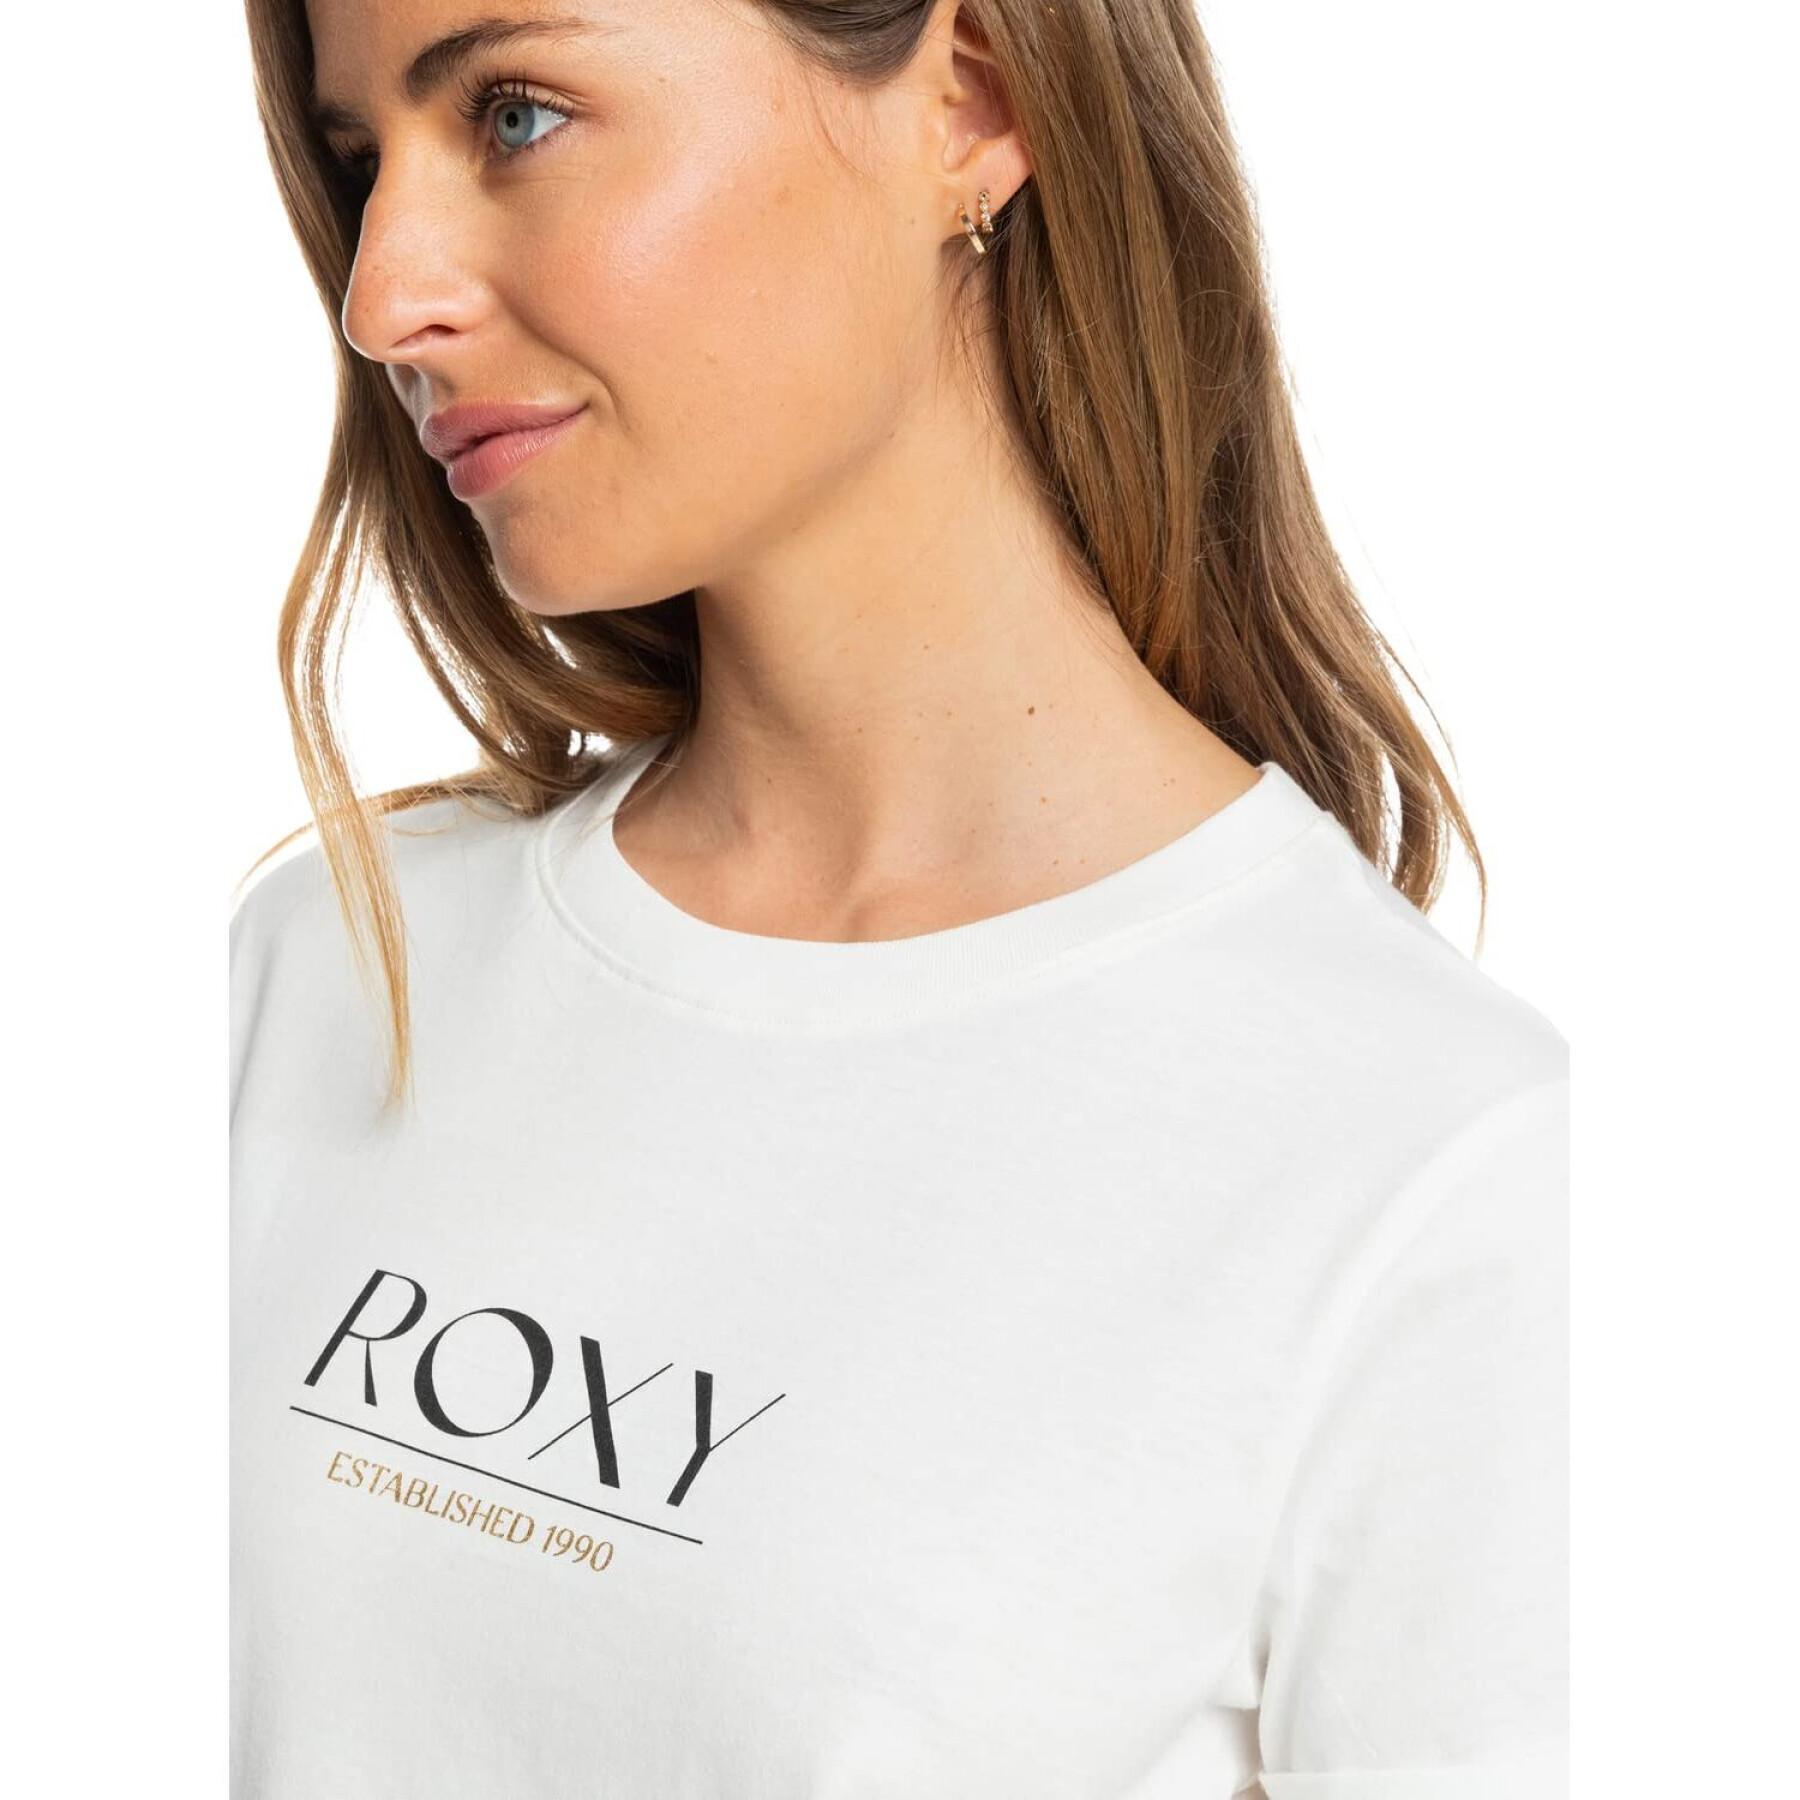 T-shirt femme Roxy Noon Ocean A